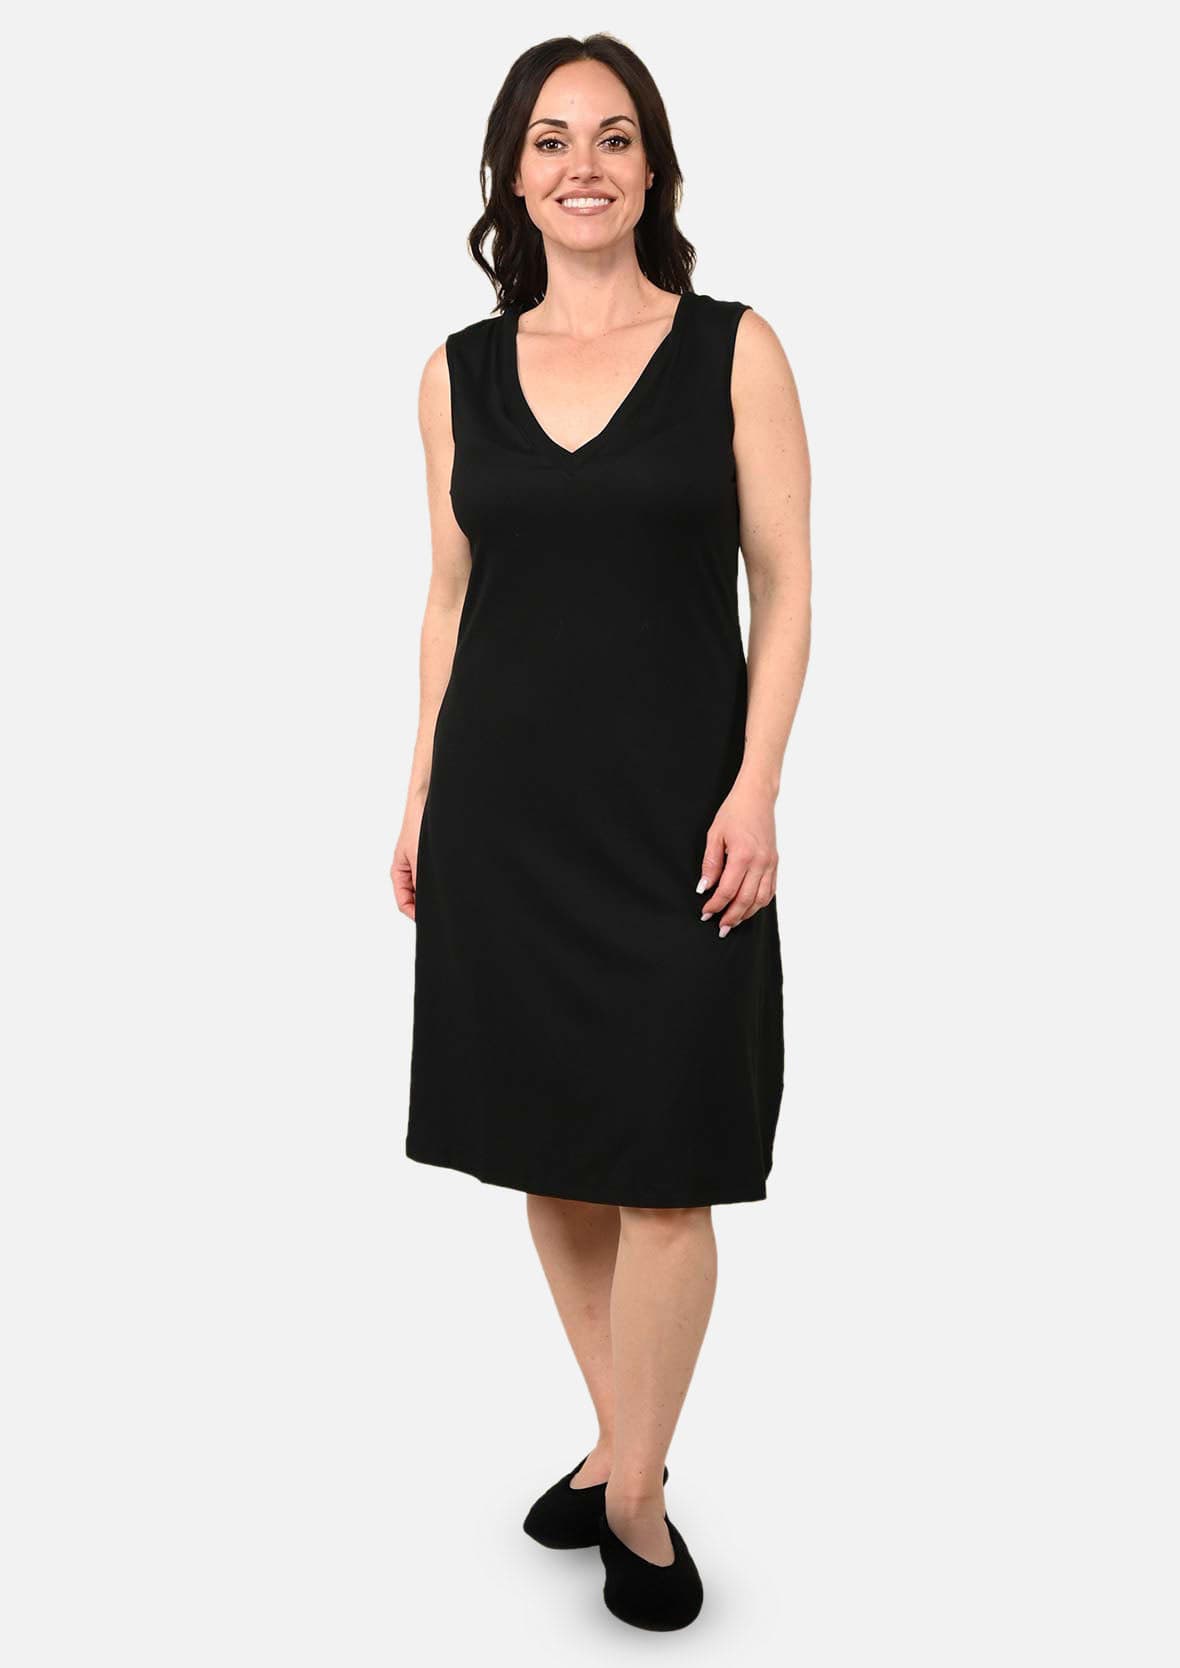 sleeveless v-neck black dress #color_Ebony Black